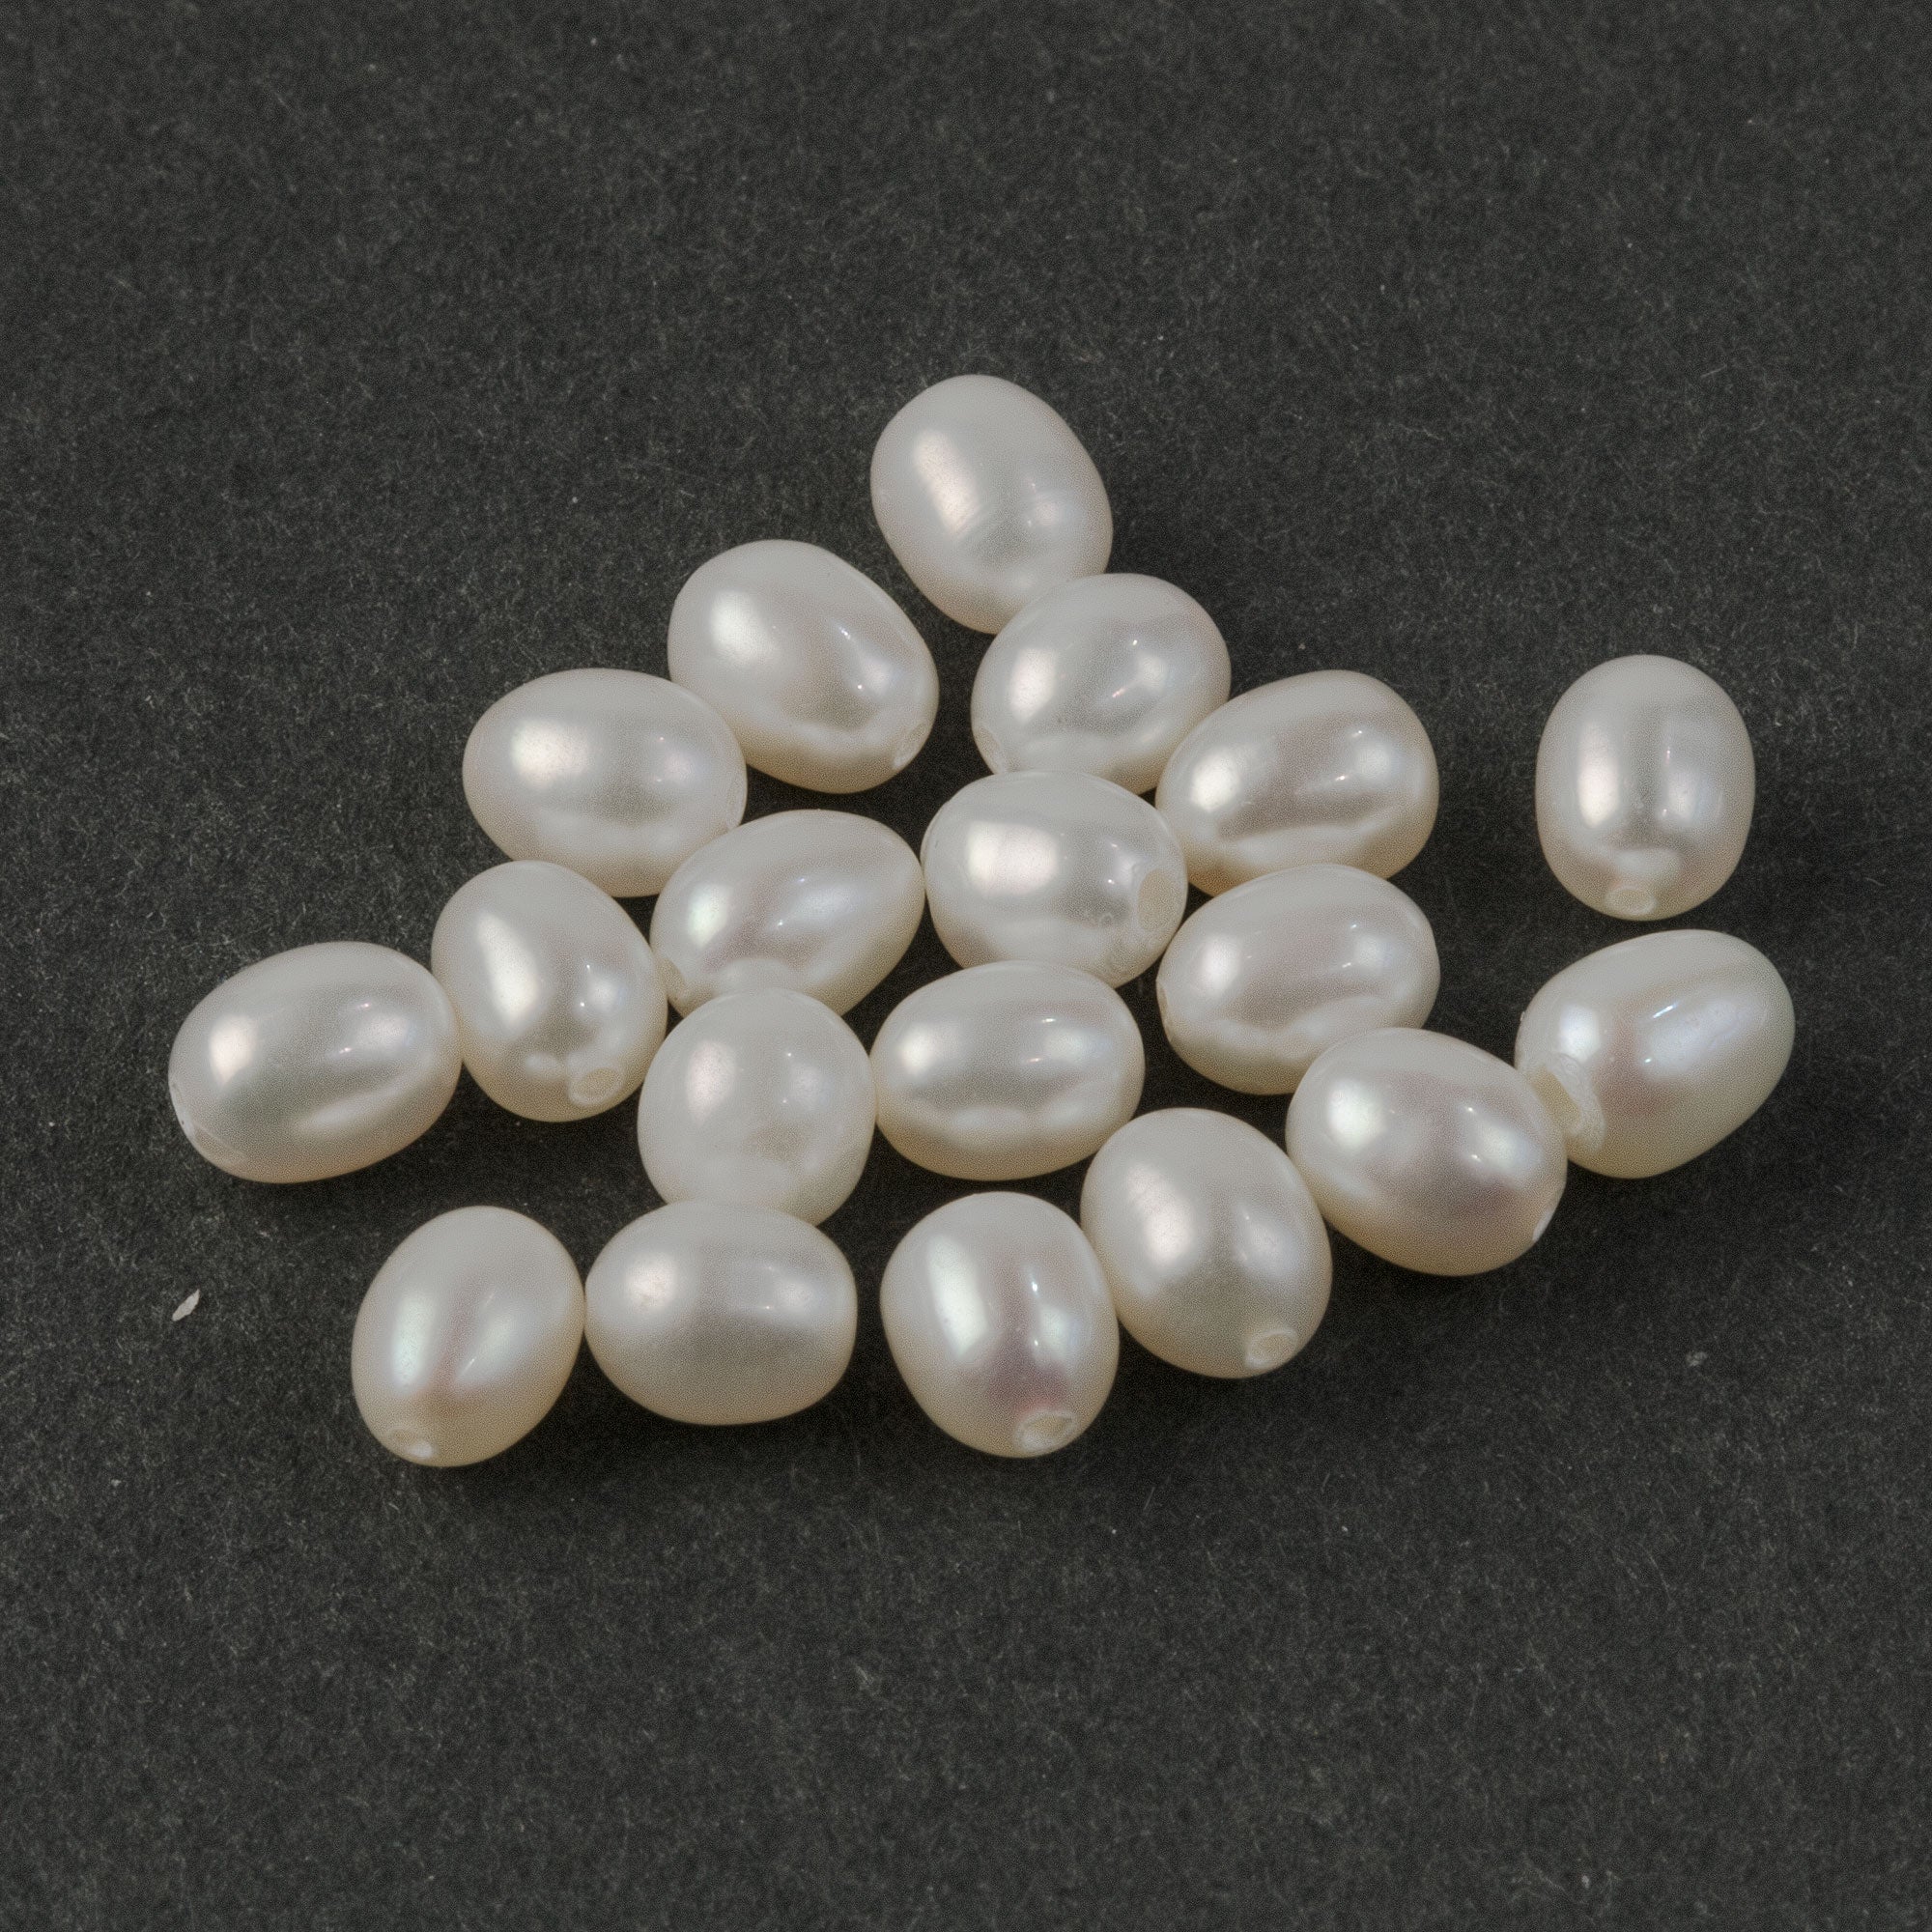 Vintage faux pearls: 125,700 ppm Lead. 90 ppm is unsafe. Please